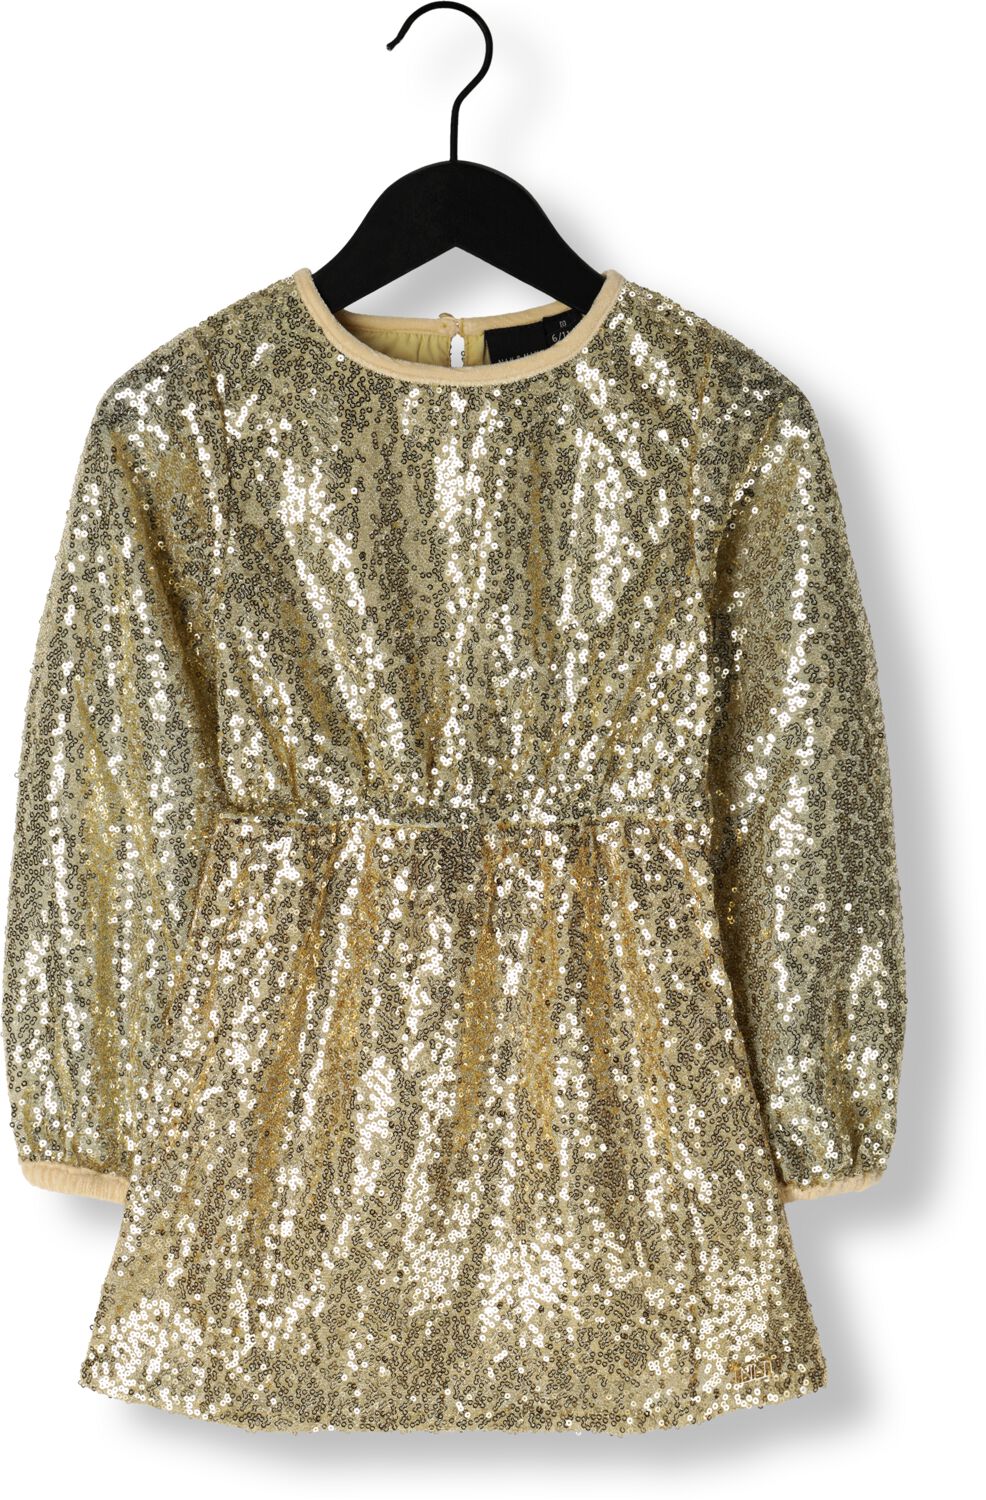 NIK&NIK jurk Riz met pailletten goud Meisjes Polyester Ronde hals 128